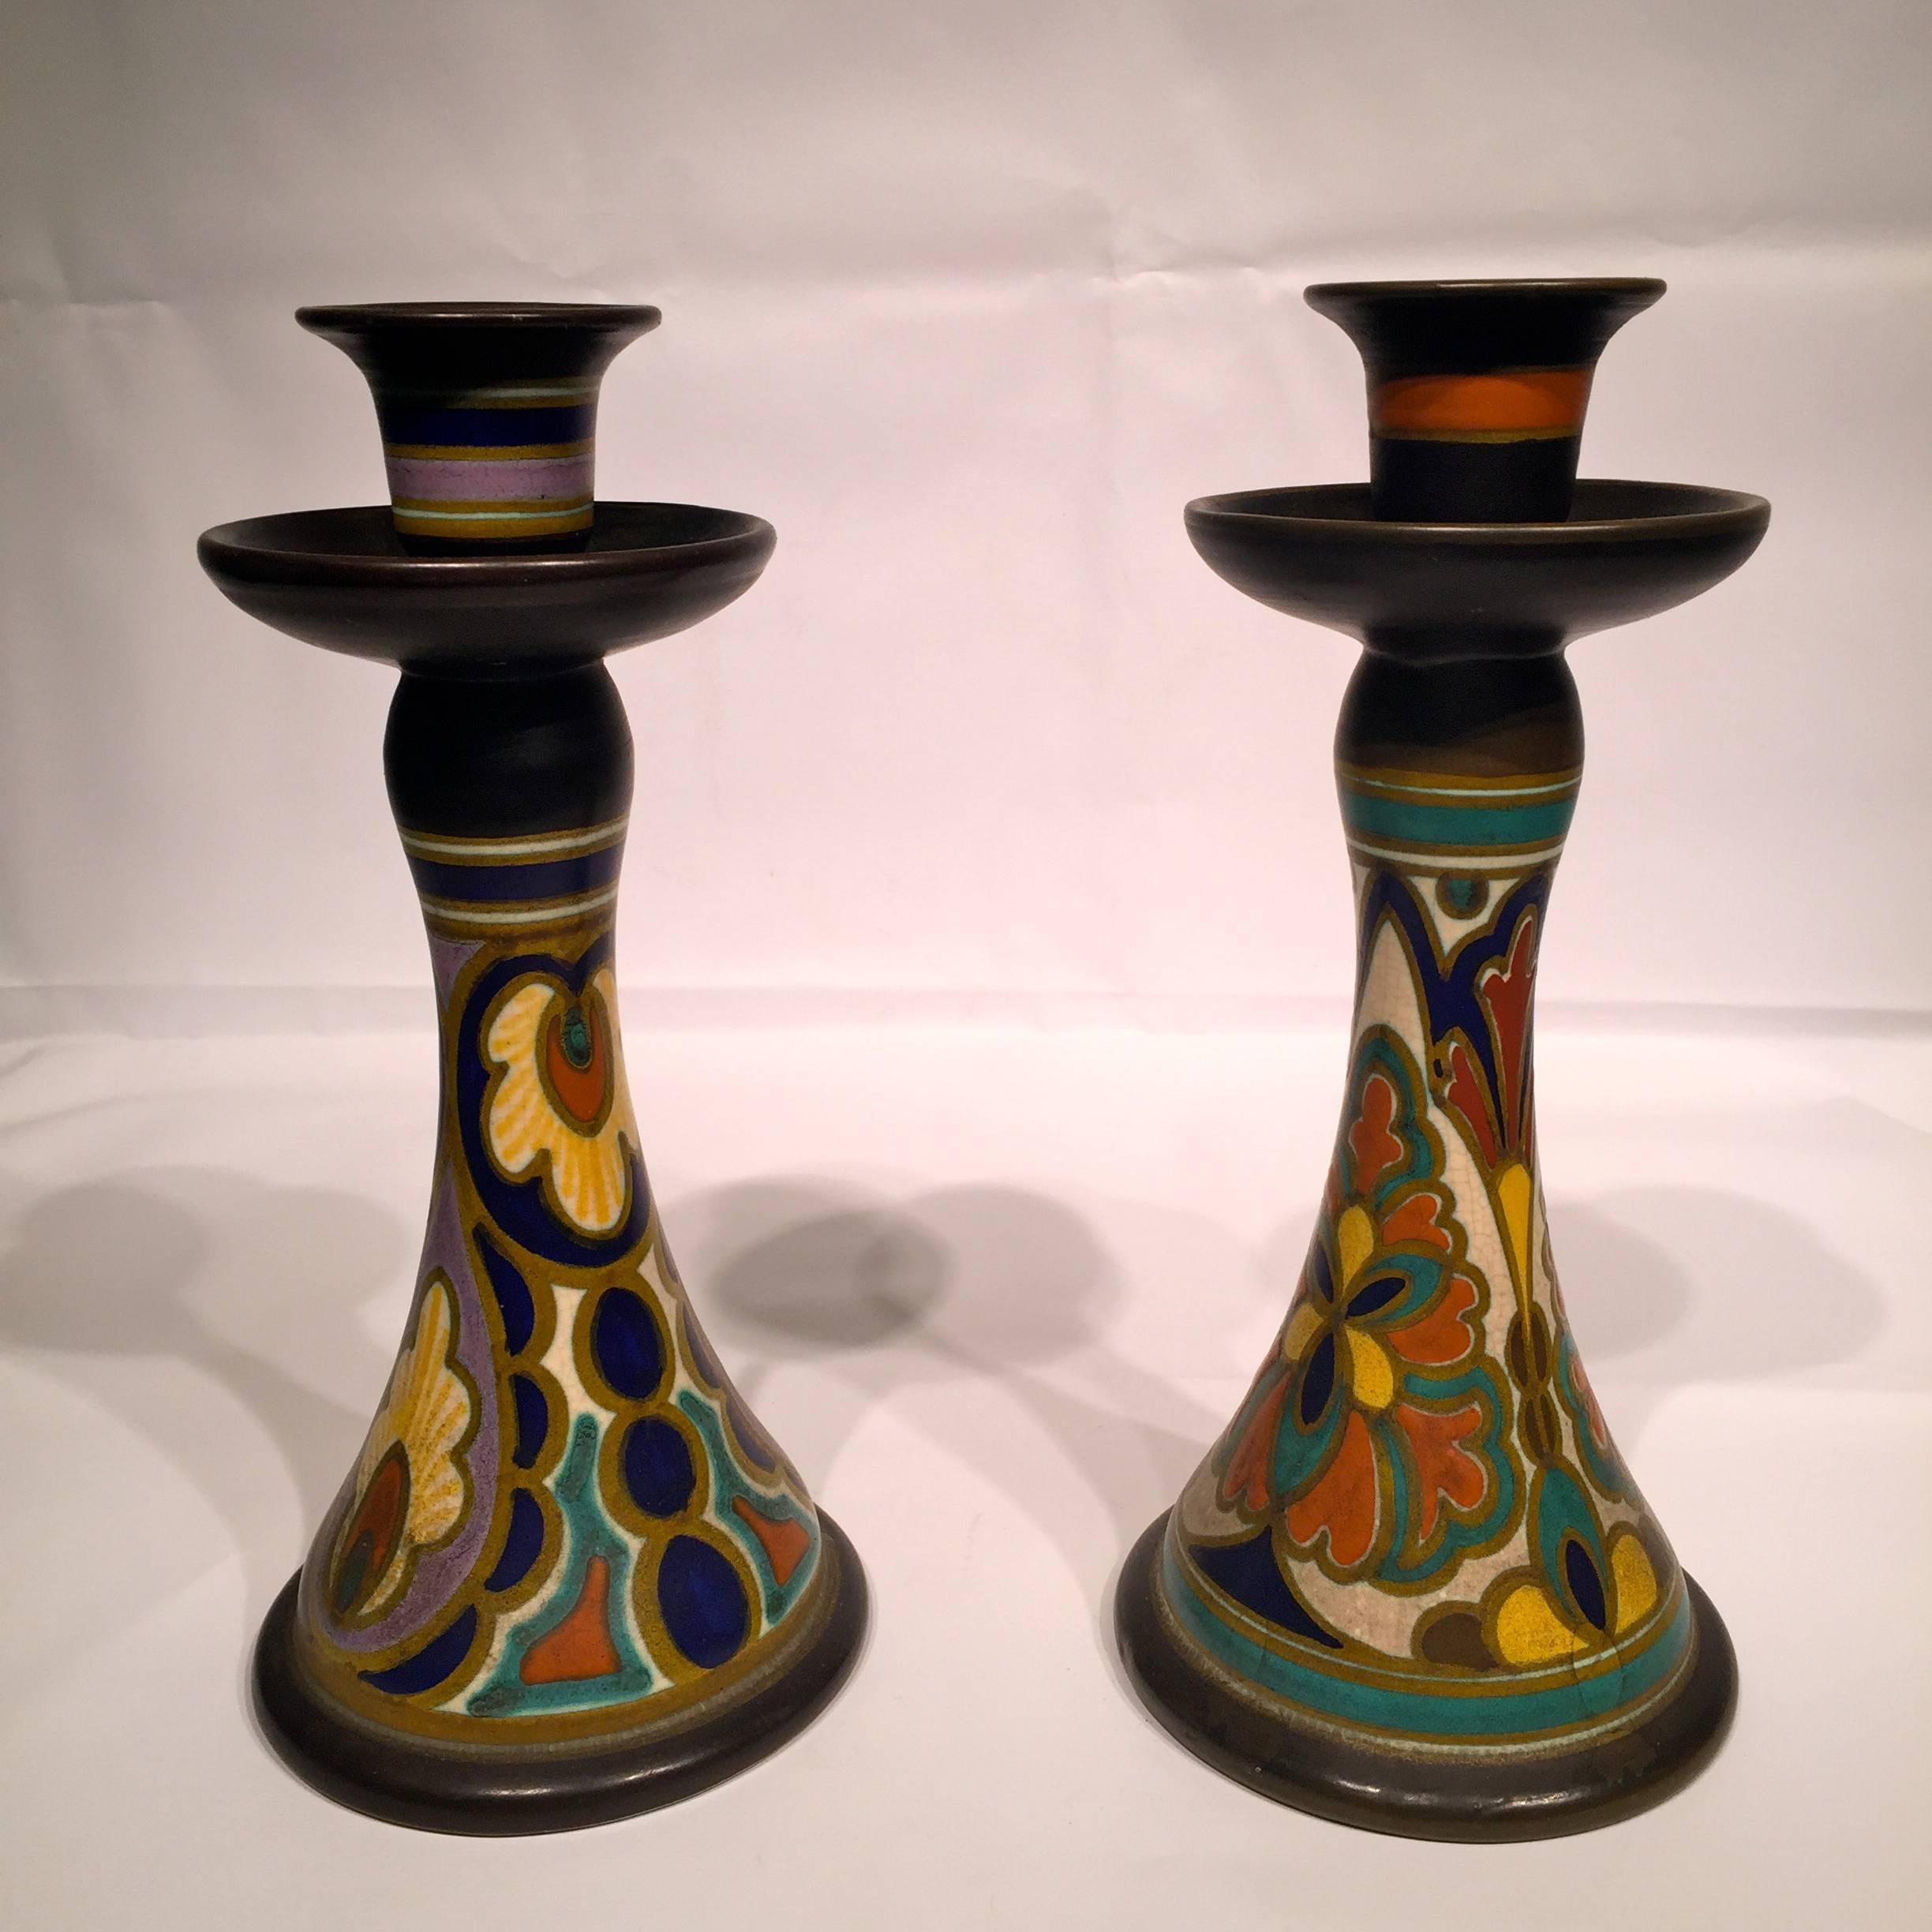 Pair of candleholders in Dutch Art Nouveau ceramic signed Gouda, circa 1900.